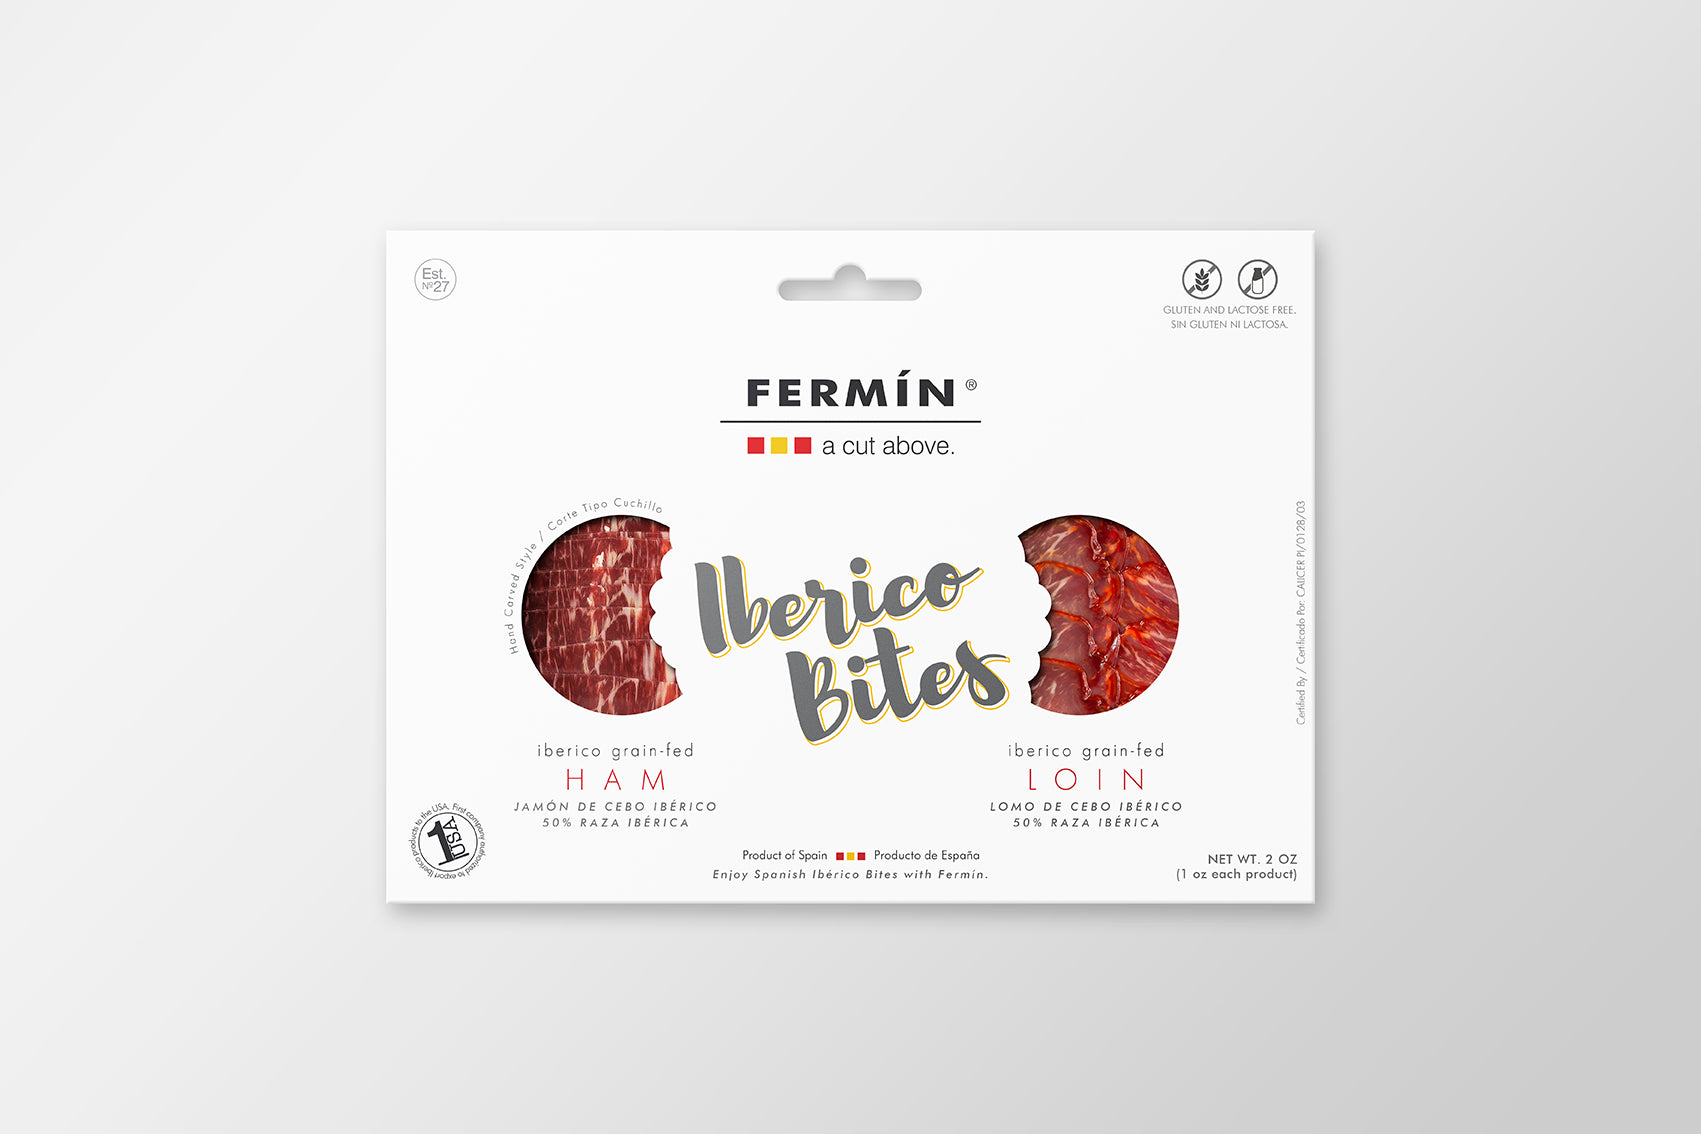 Bites by Fermin 1 oz each